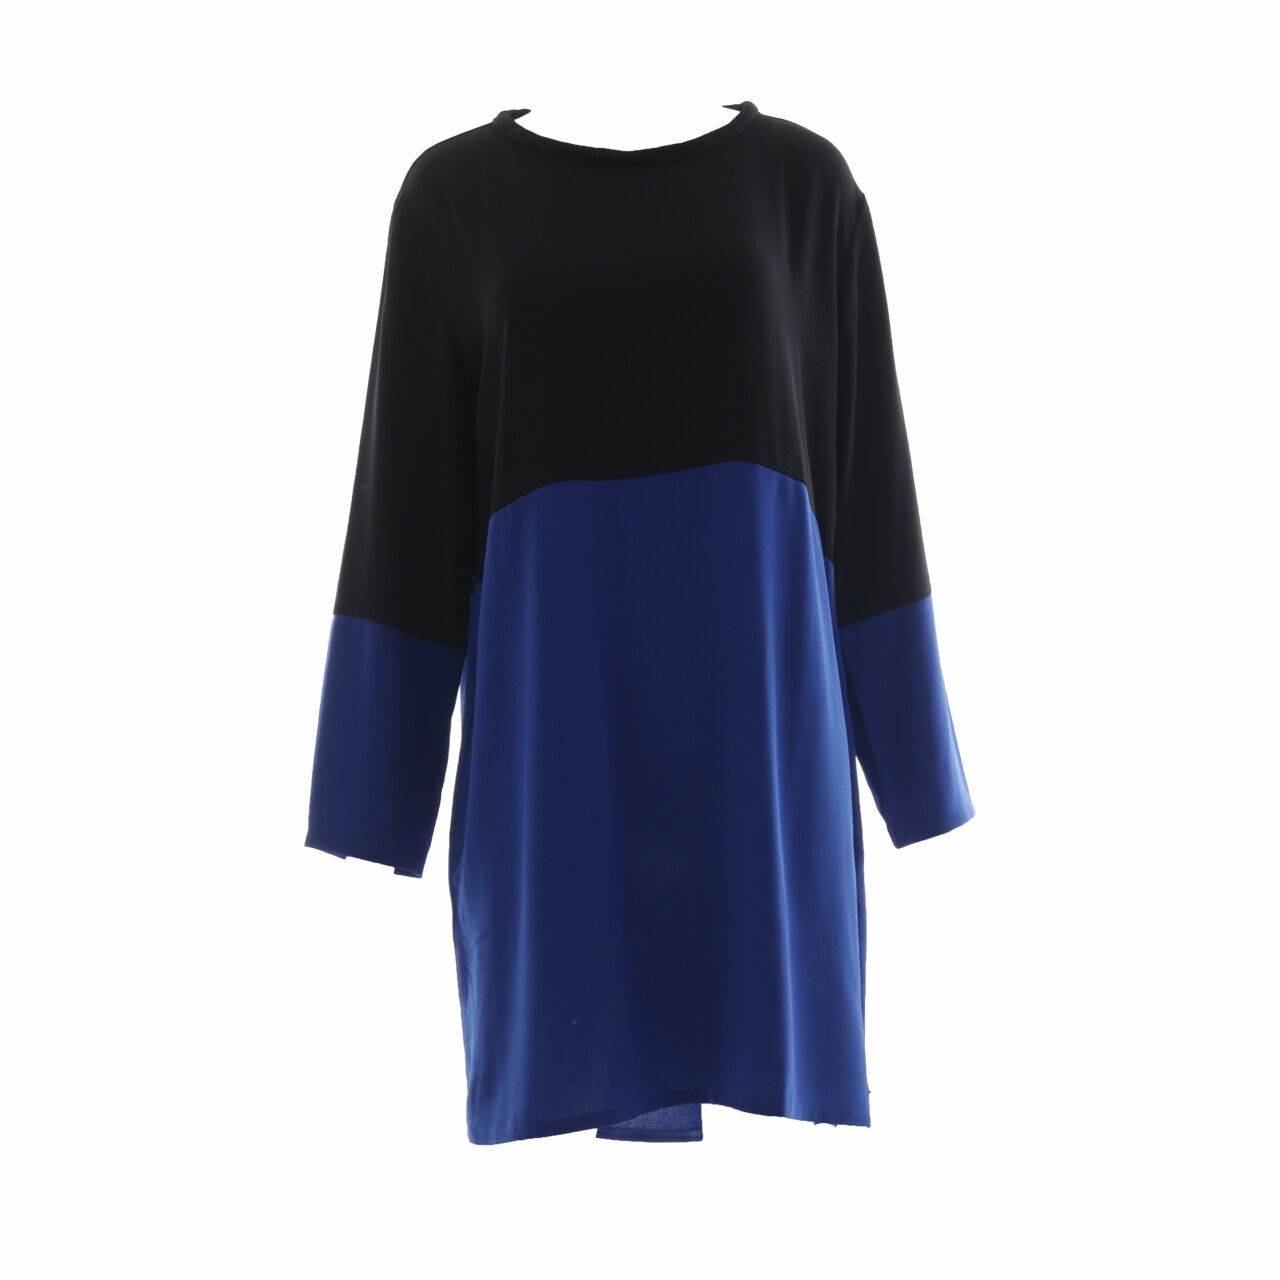 Zara Blue & Black Tunic Blouse